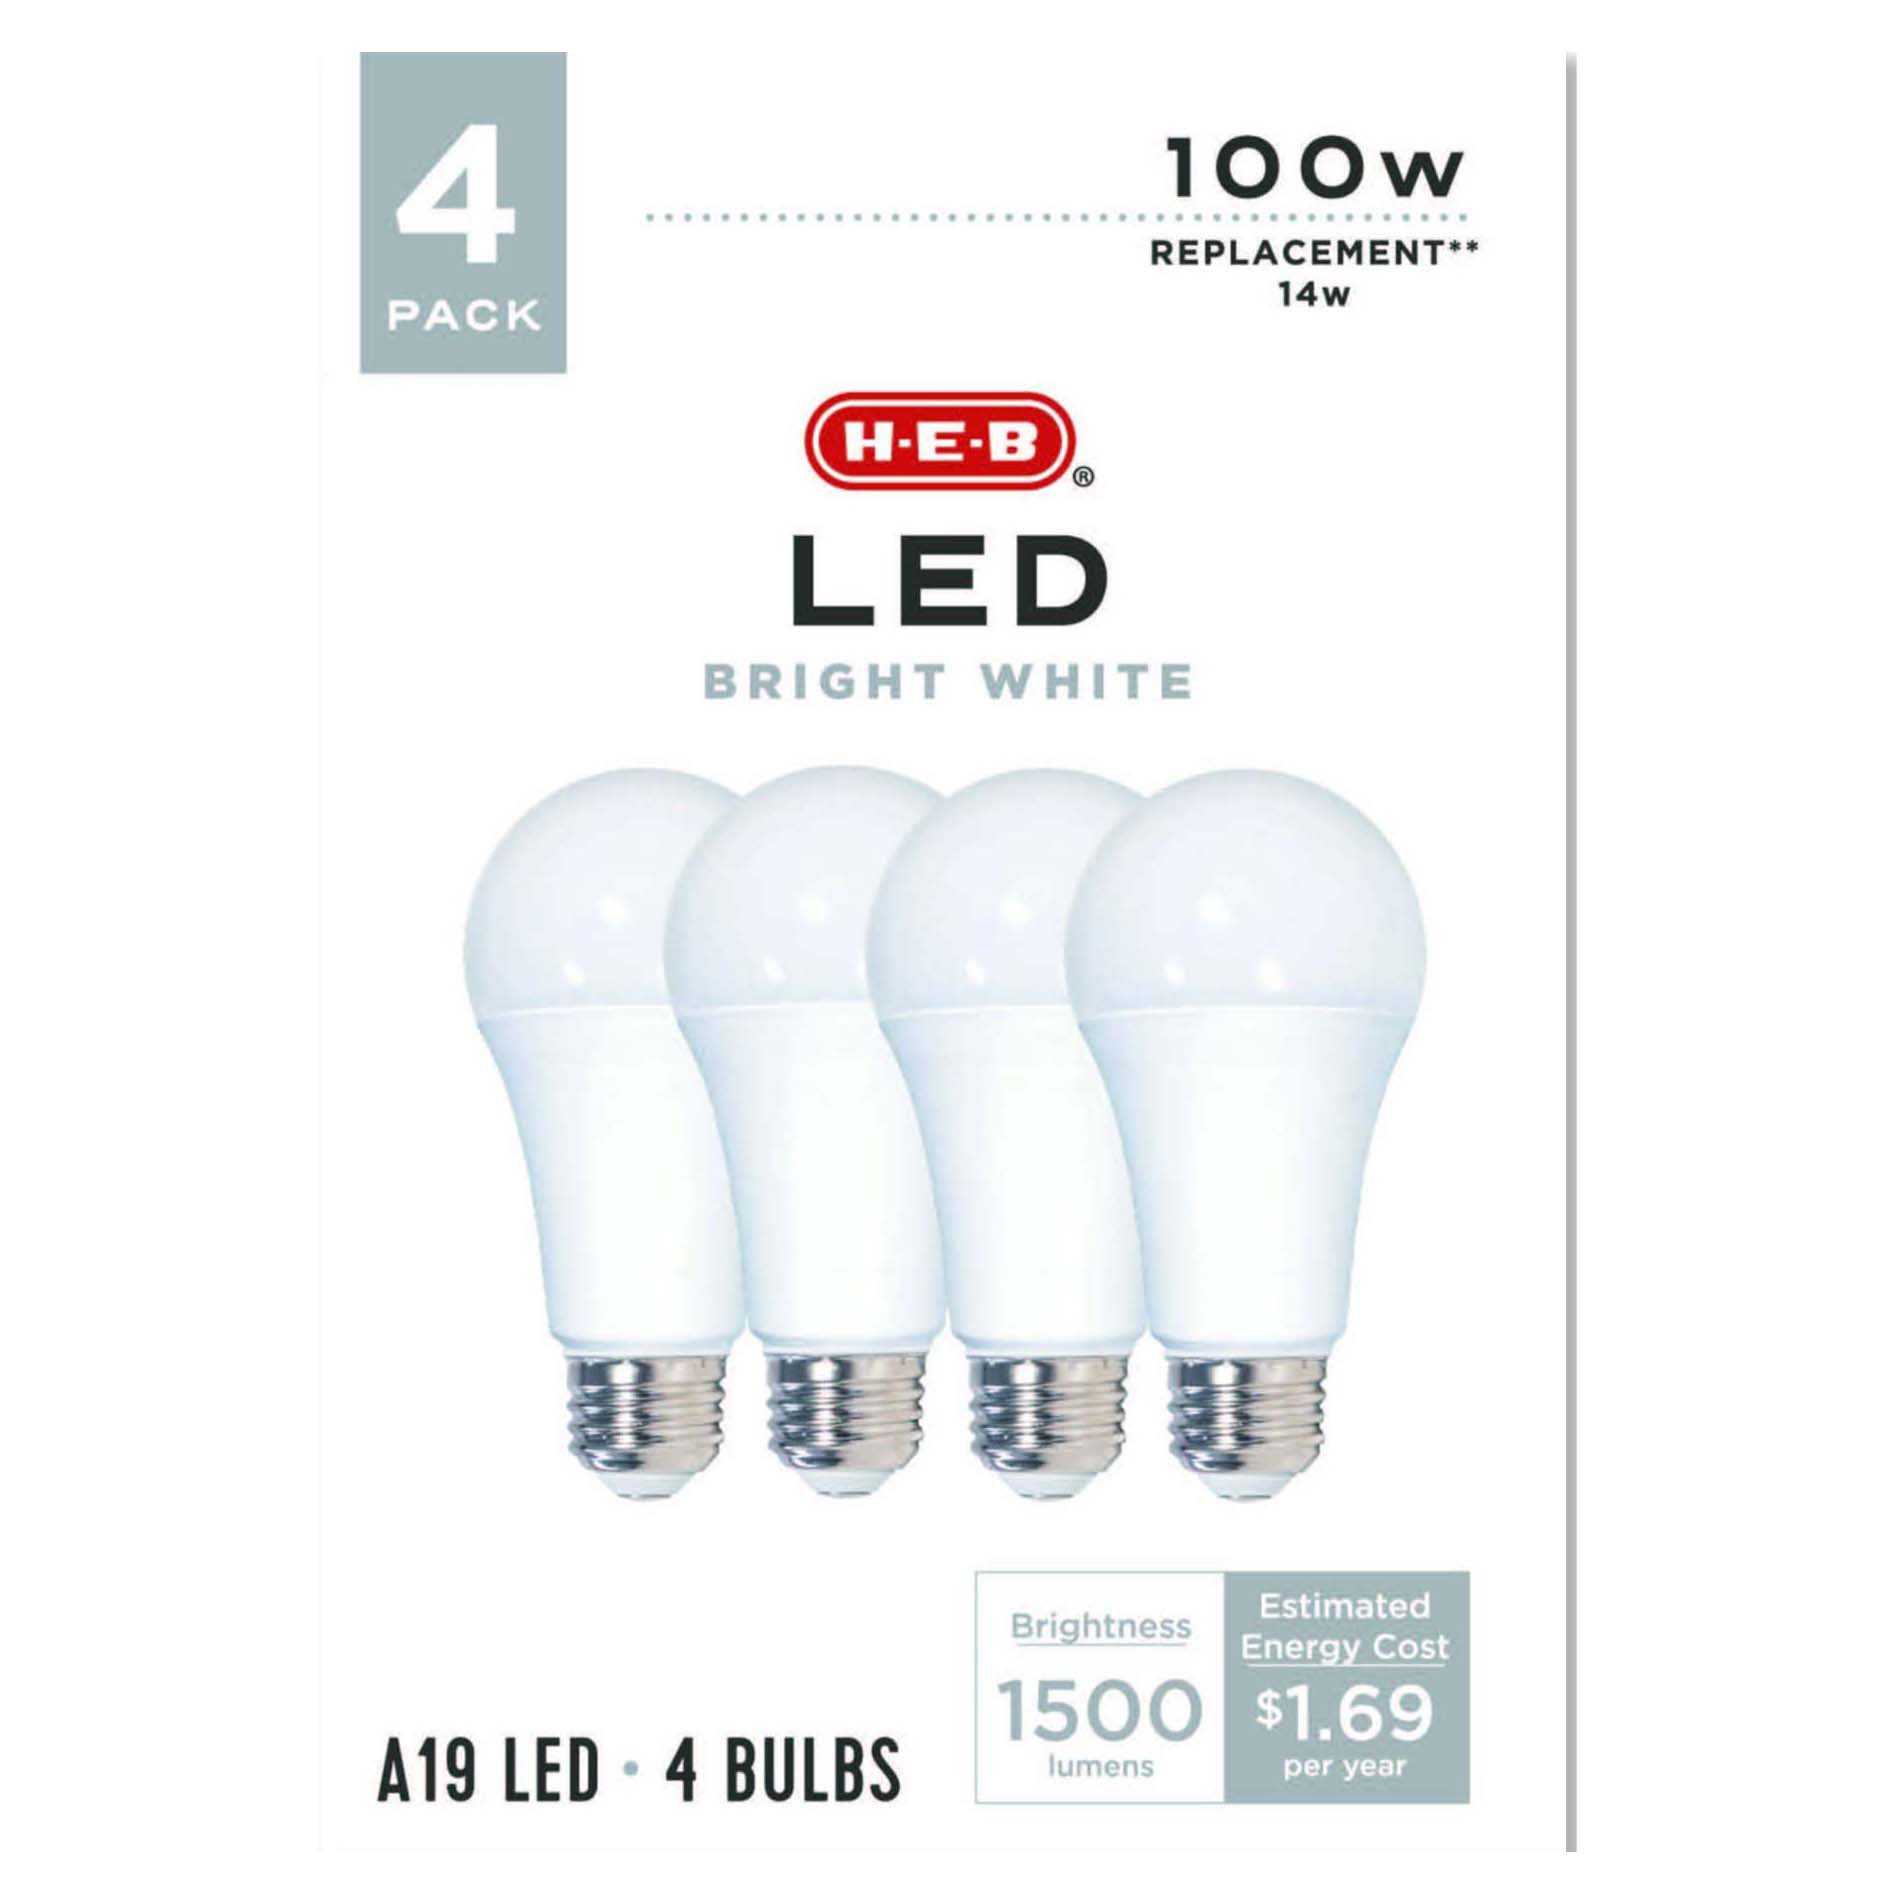 audition tub Arabiske Sarabo H-E-B A19 100-Watt Bright White LED Light Bulbs - Shop Light Bulbs at H-E-B